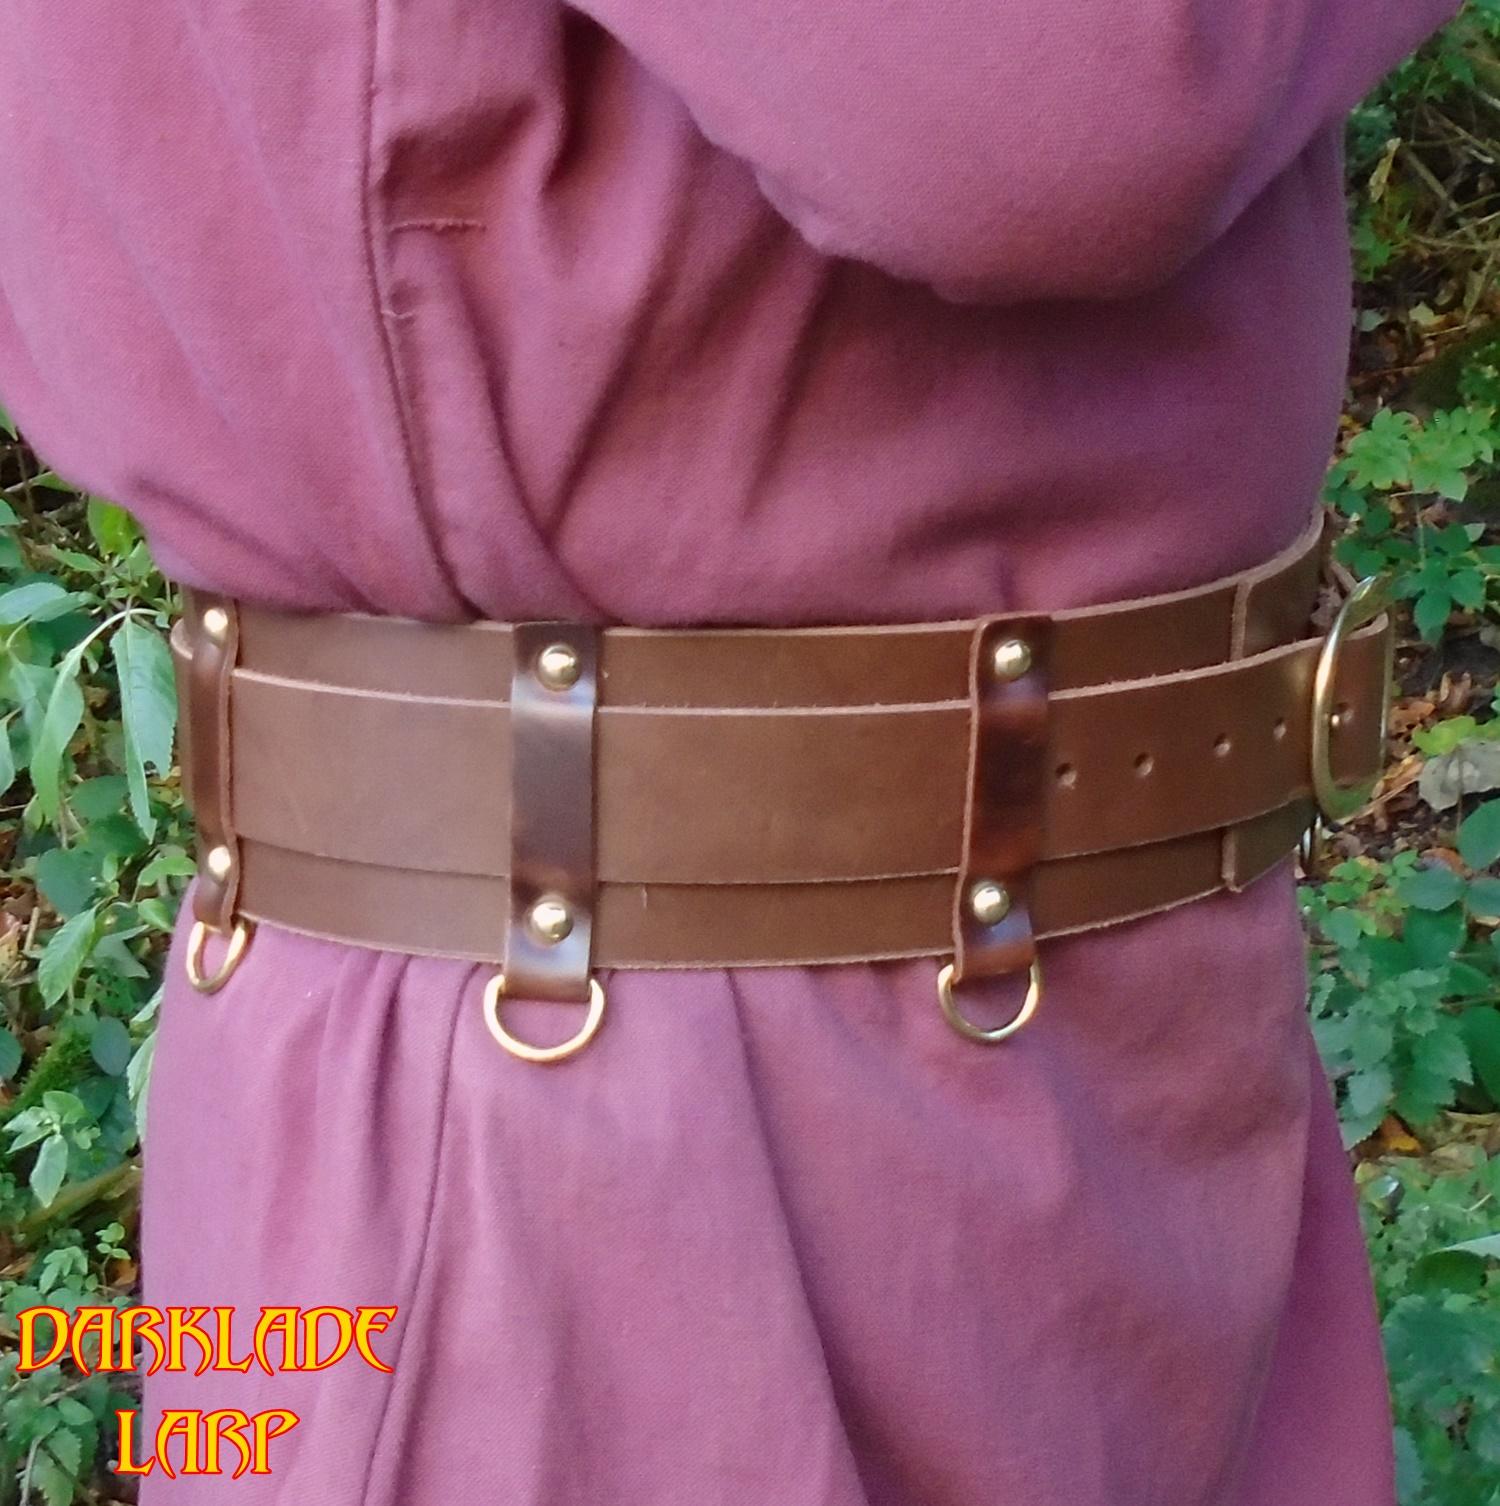 Fairly Brave Adventurer's Belt